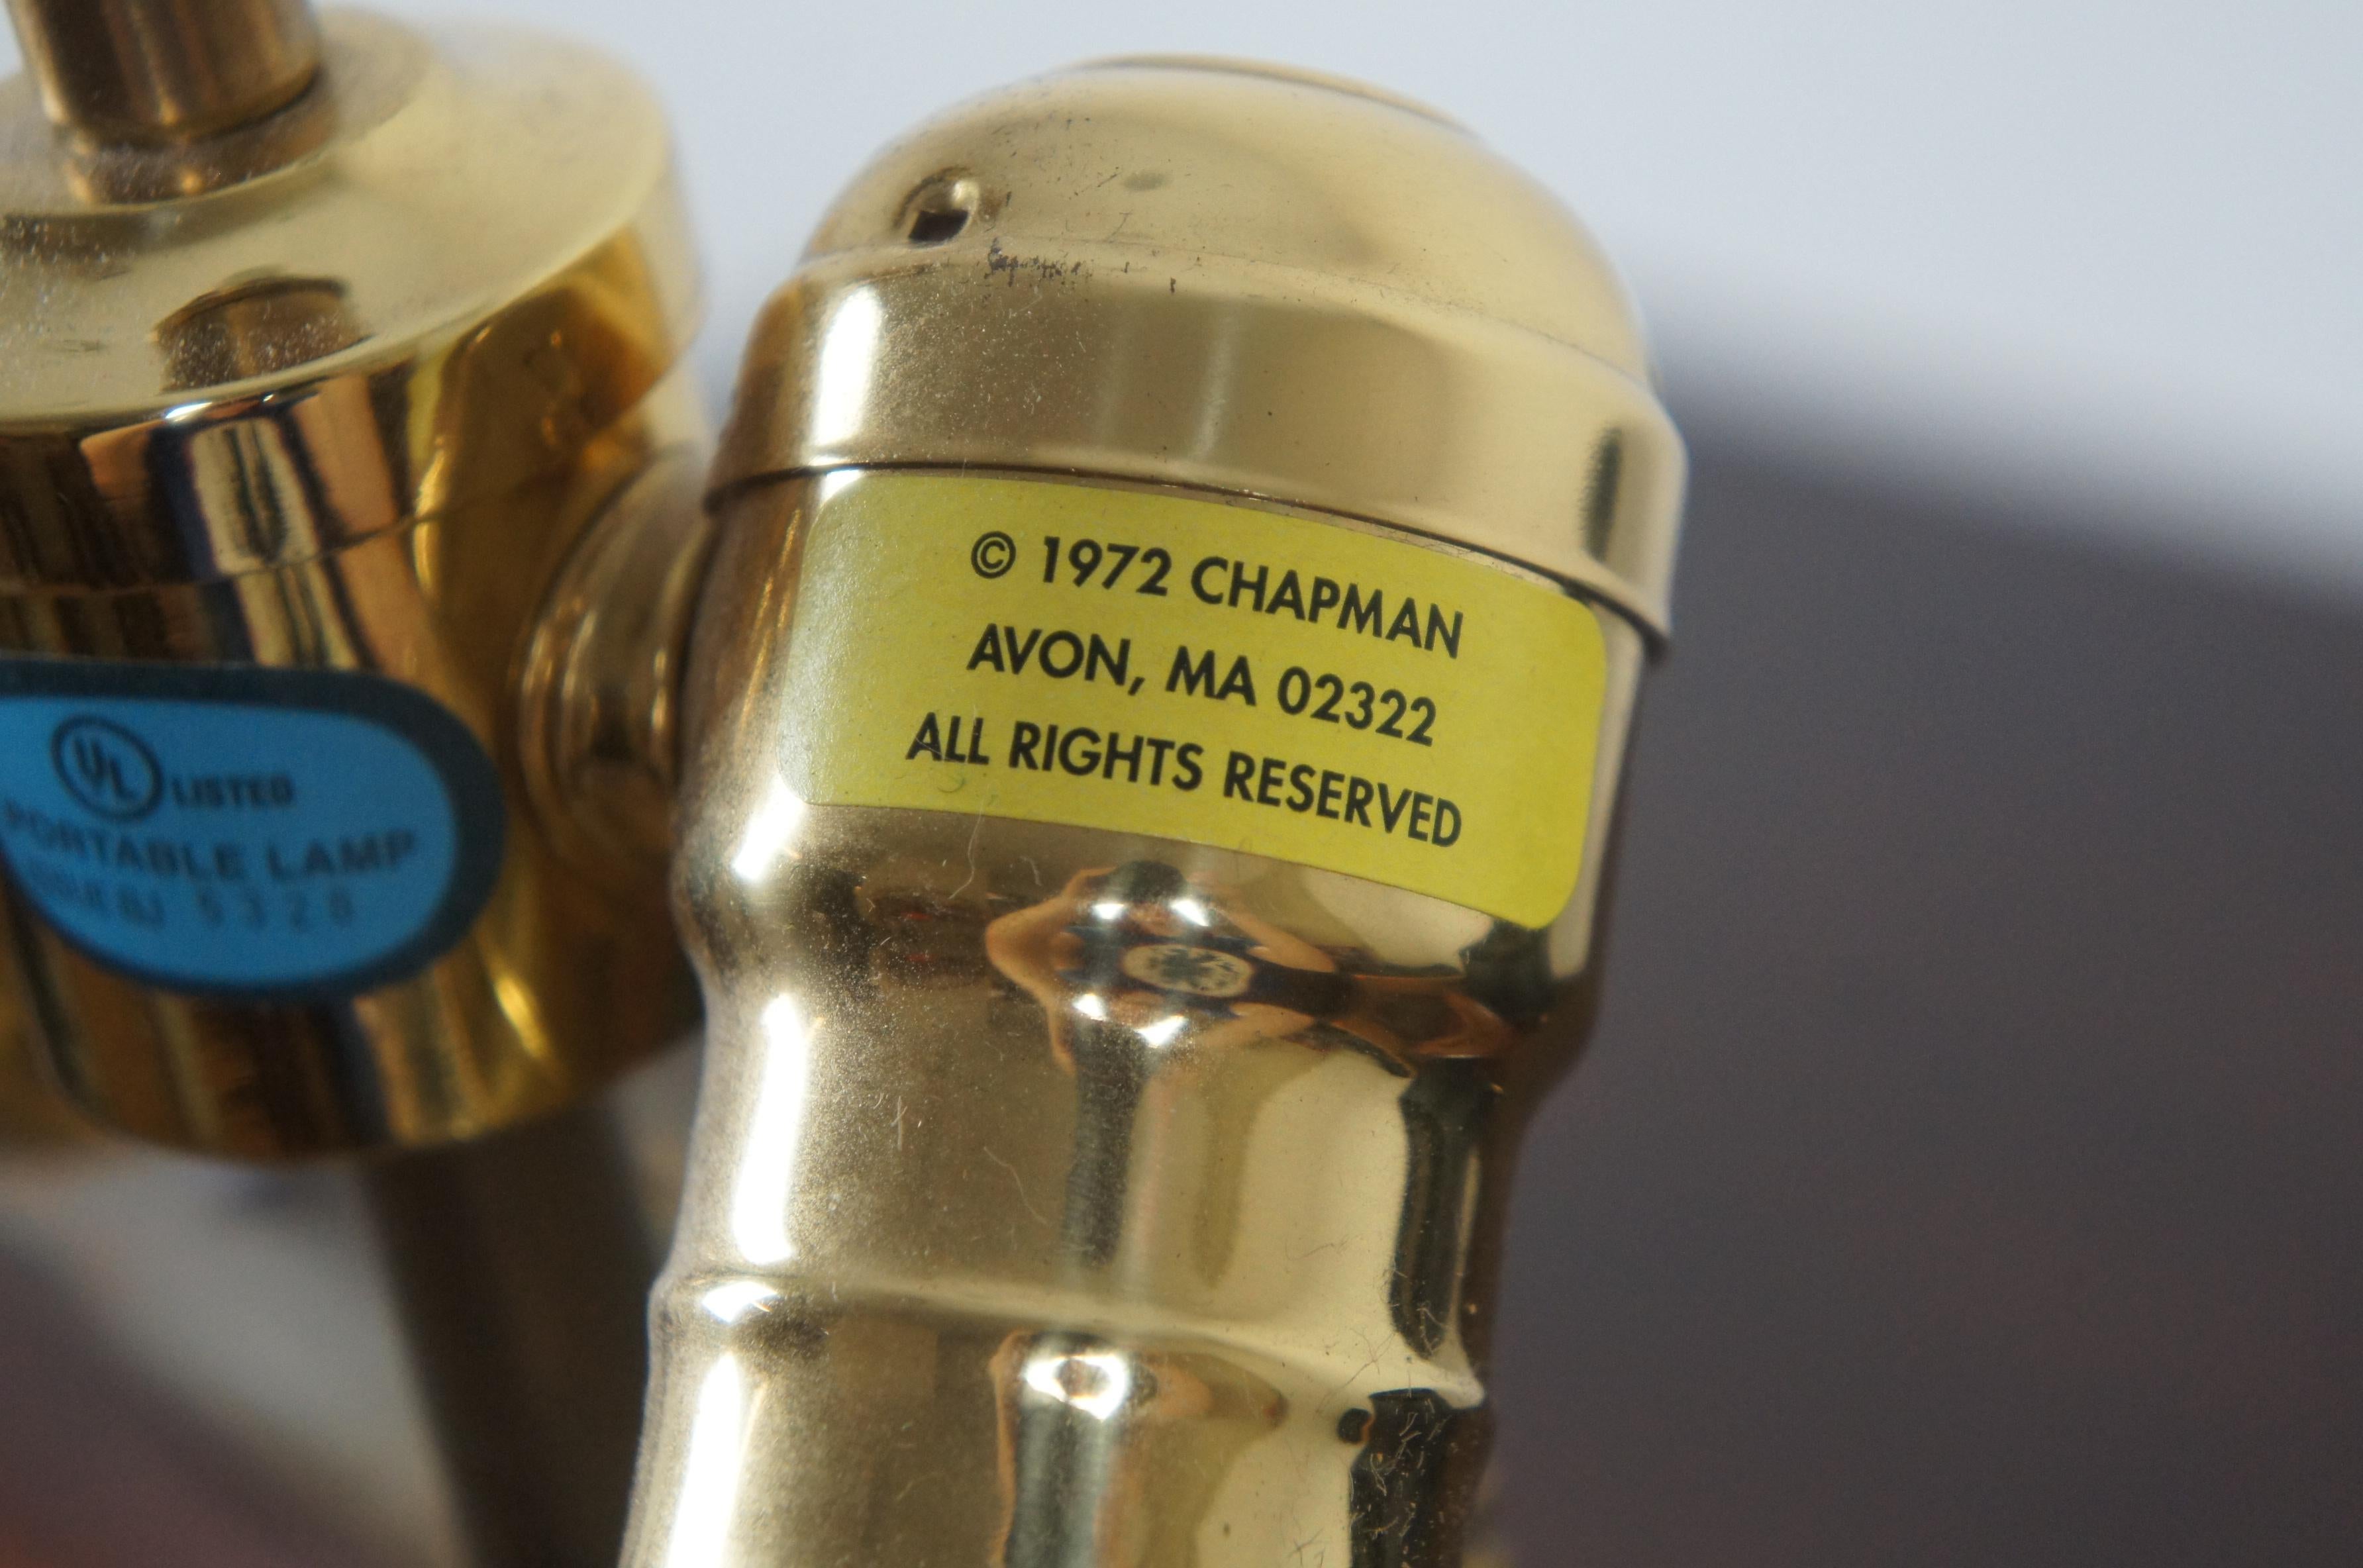 1972 Chapman Brass Floor Candlestick Lamp Traditional Hollywood Regency X739B 6